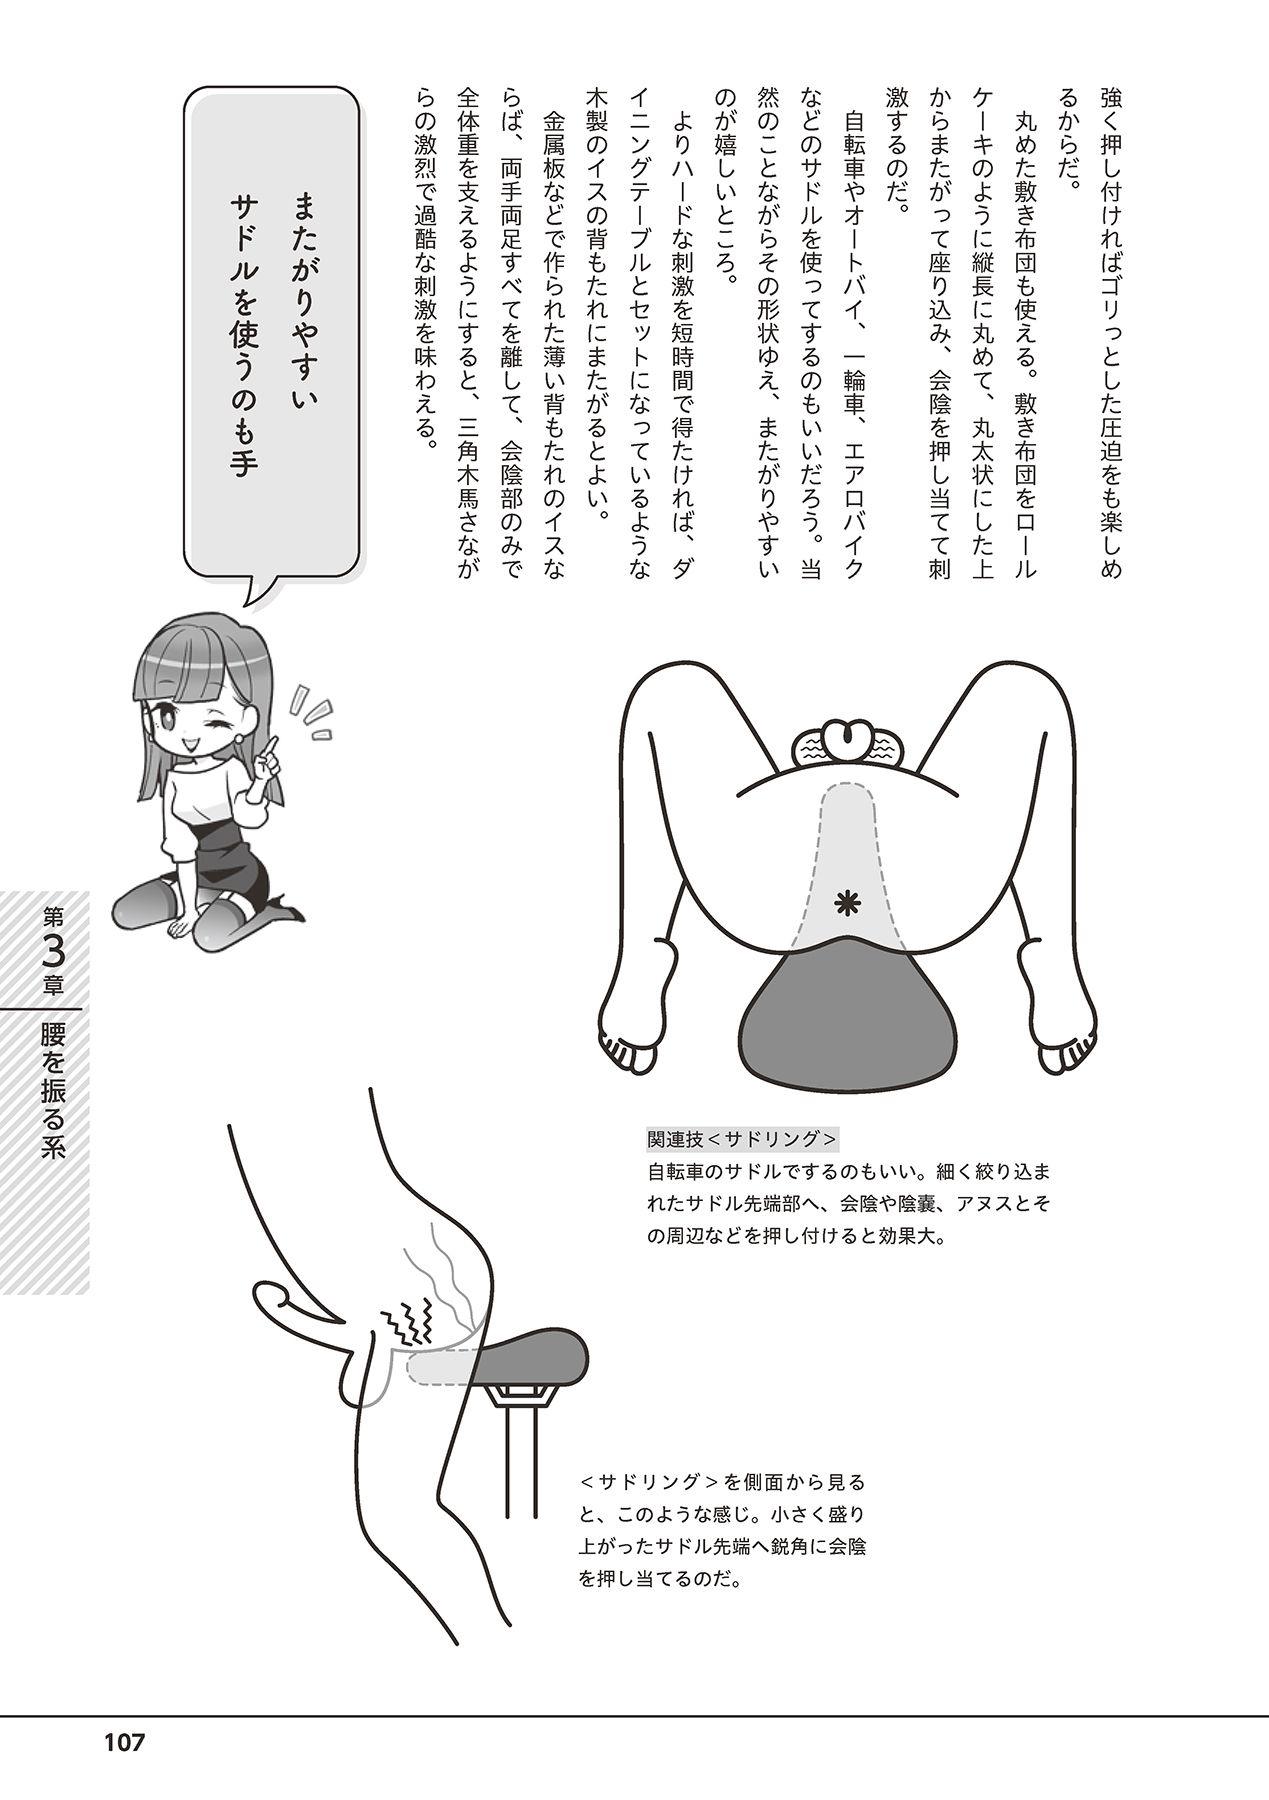 Otoko no Jii Onanie Kanzen Manual Illustration Han...... Onanie Play 108